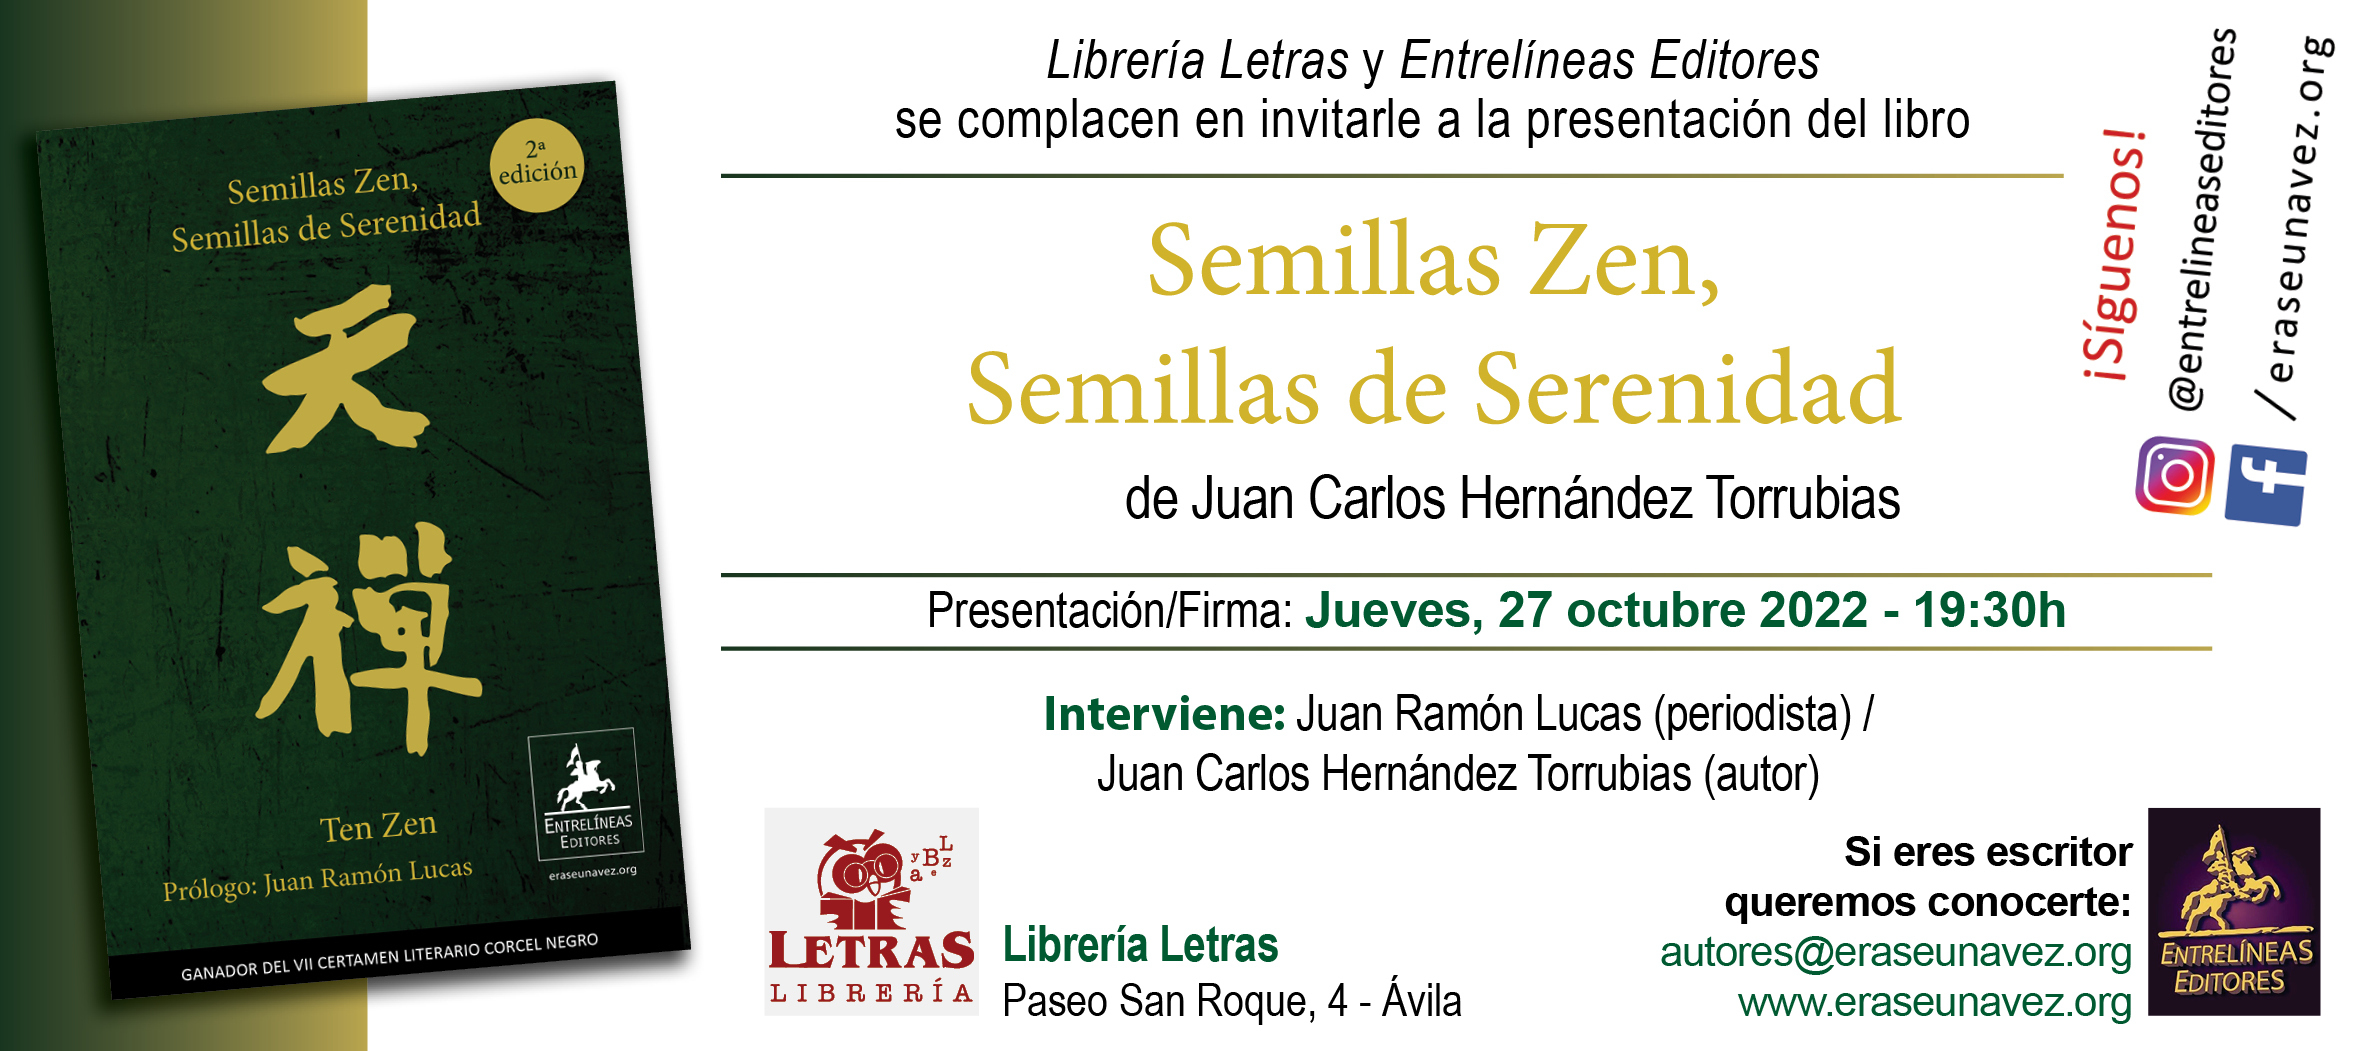 2022-10-27_-_Semillas_Zen_-_invitacion